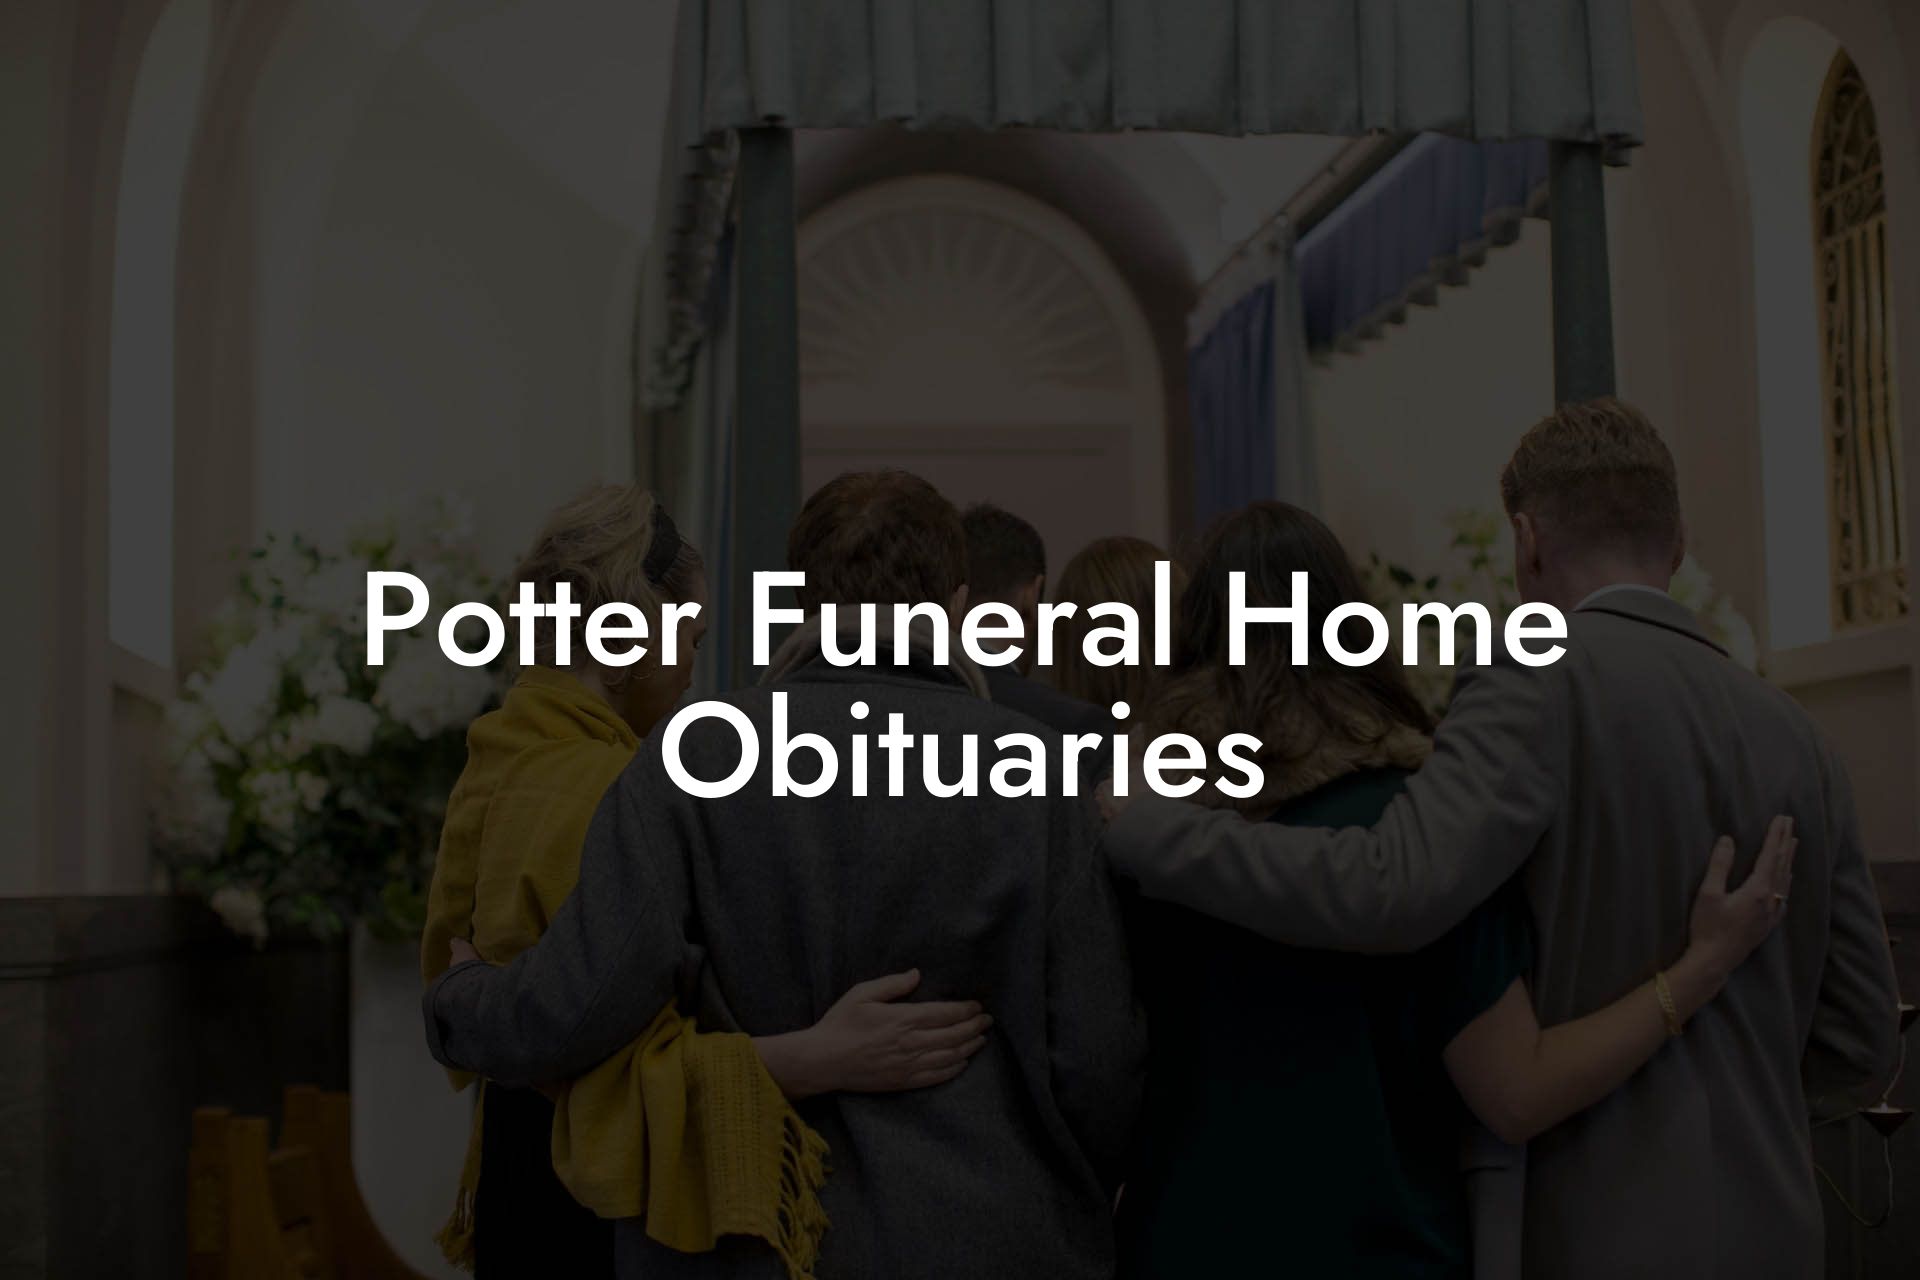 Potter Funeral Home Obituaries